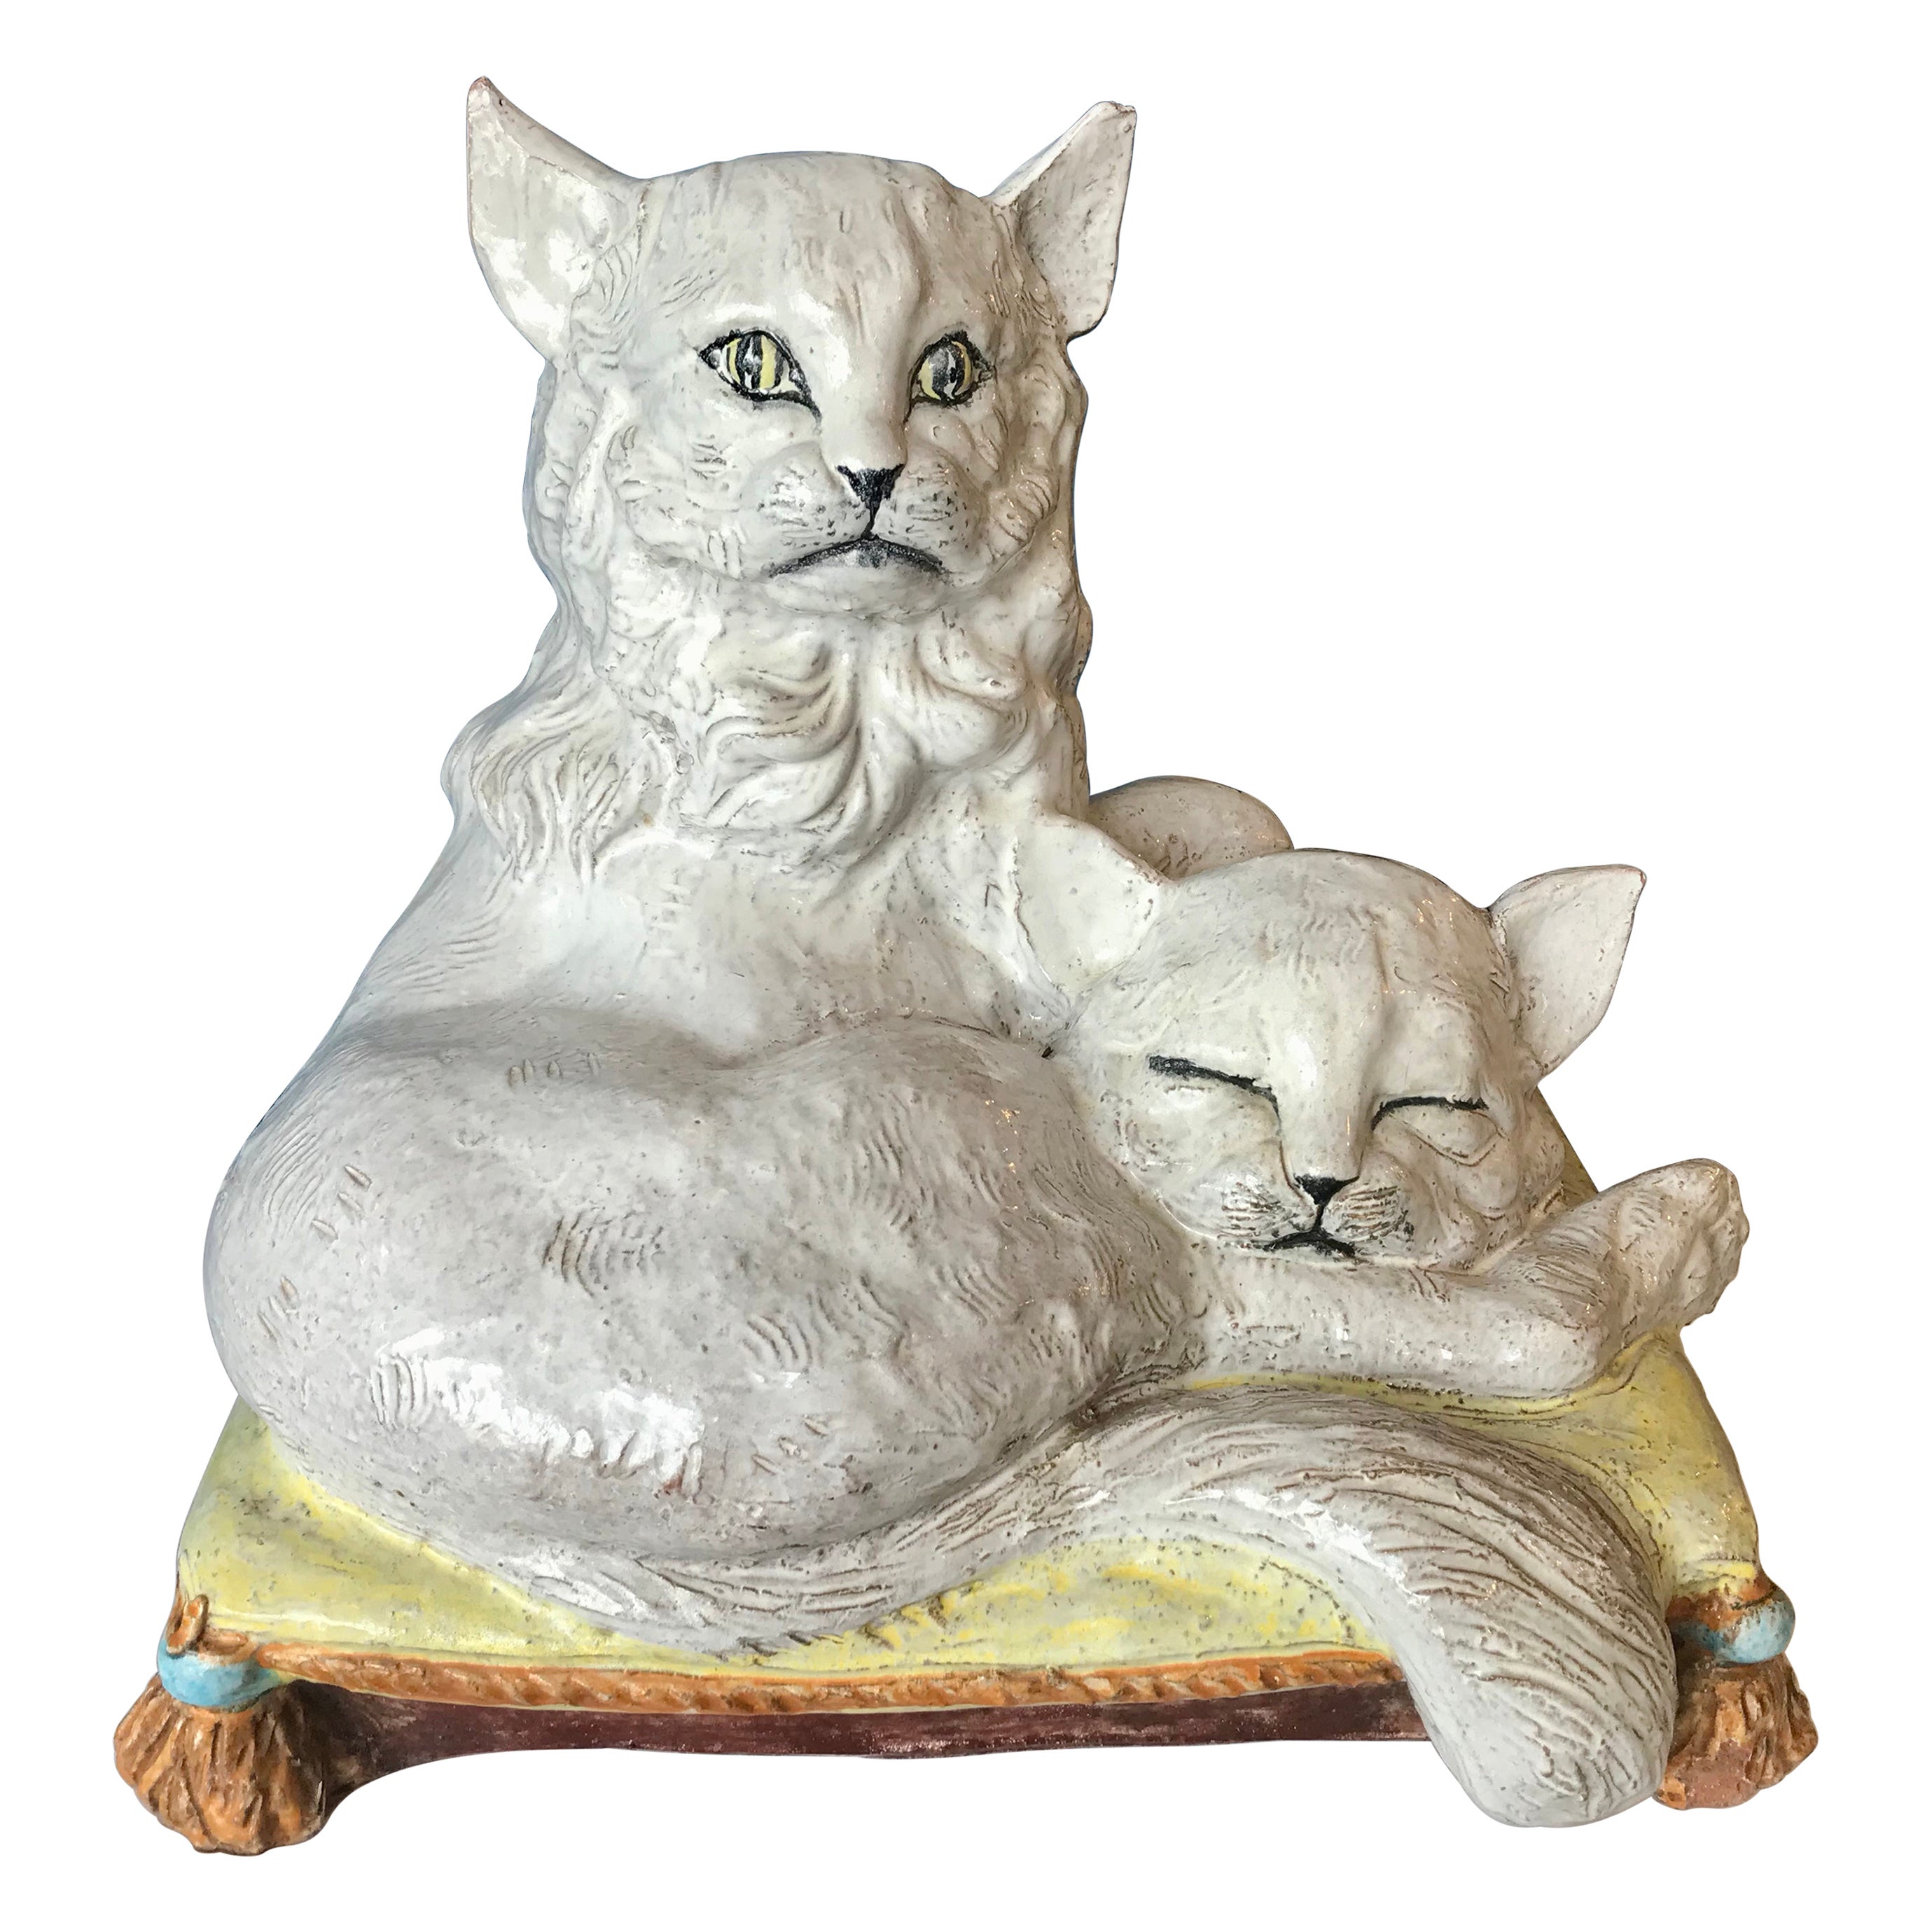 Life Size Italian Terra-Cotta "Cats" on a Pillow